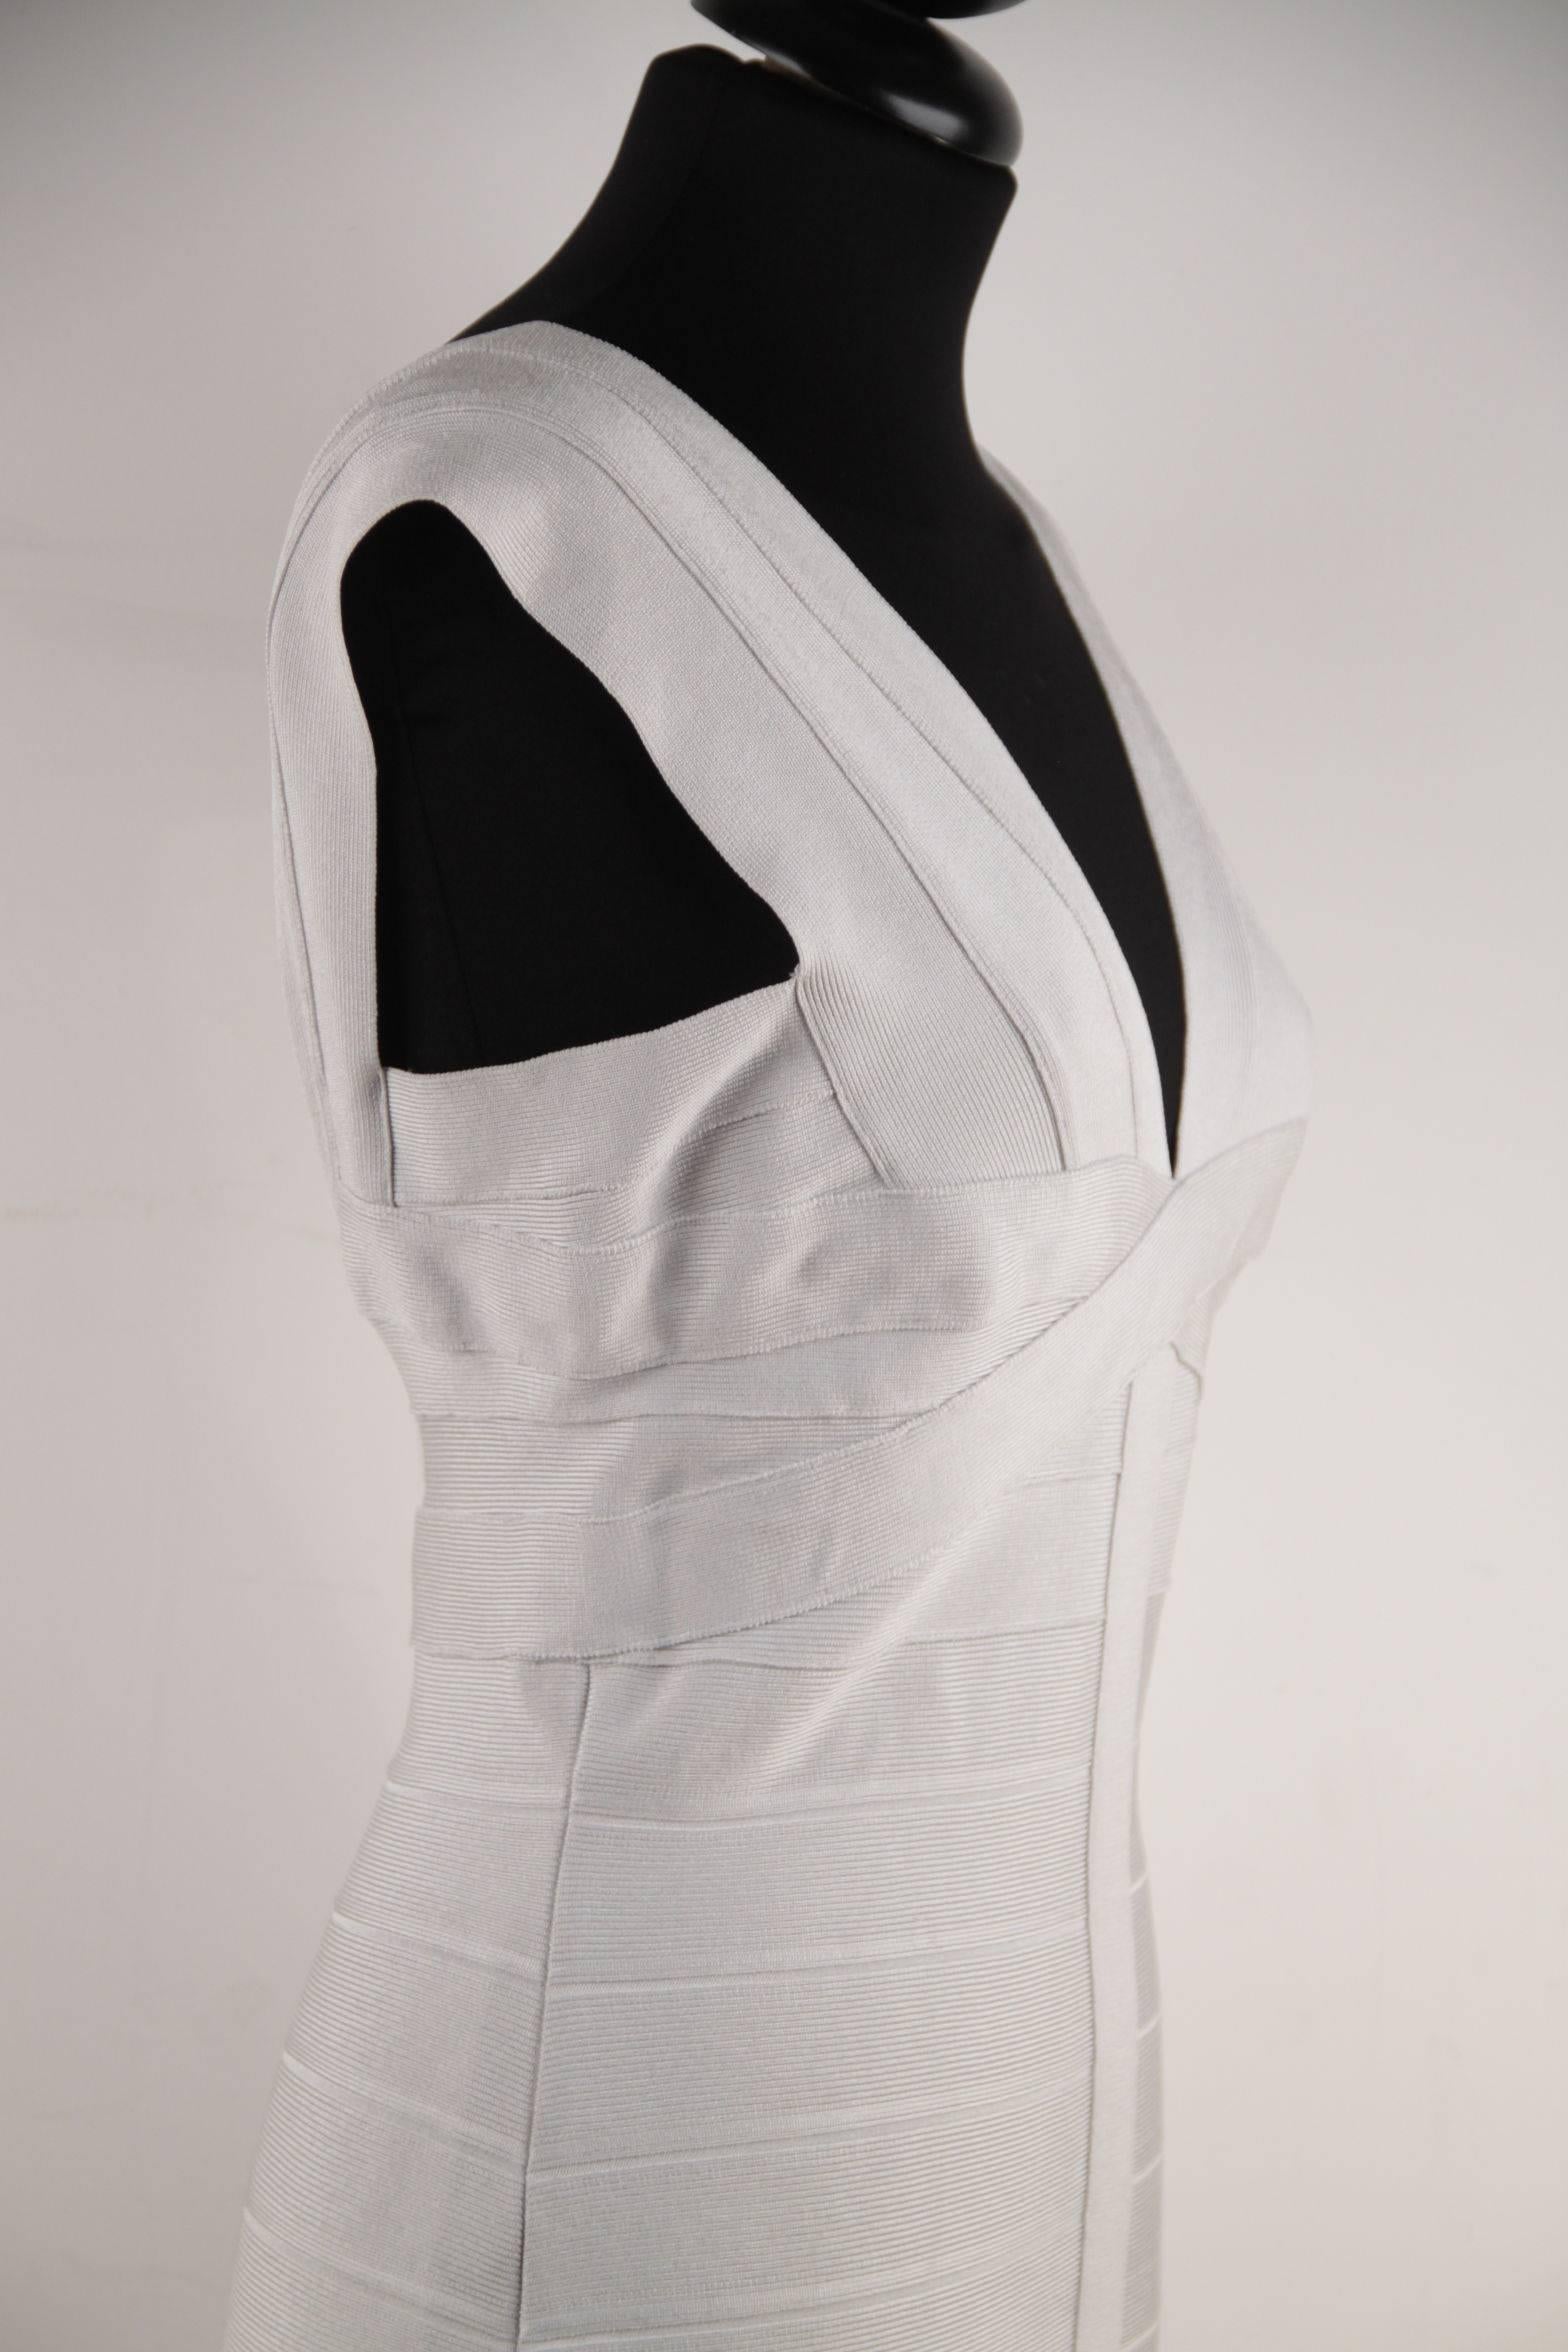 HERVE LEGER Pearl Gray Bodycon BANDAGE DRESS Sleeveless V NECK Size M CP 4